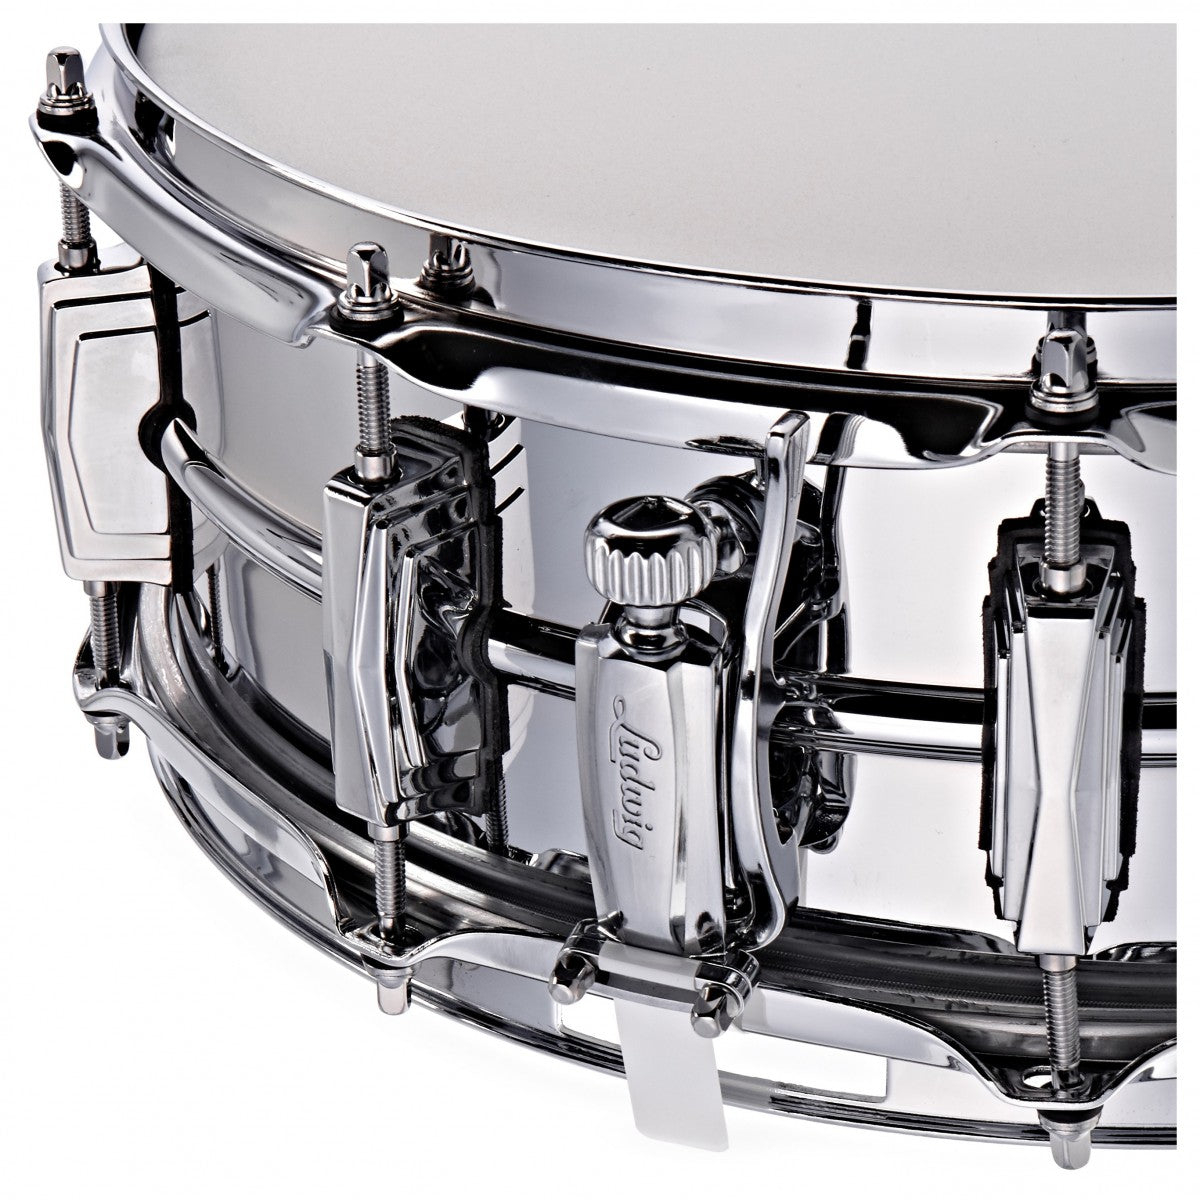 Ludwig LM400 14" x 5" Supraphonic Snare Drum